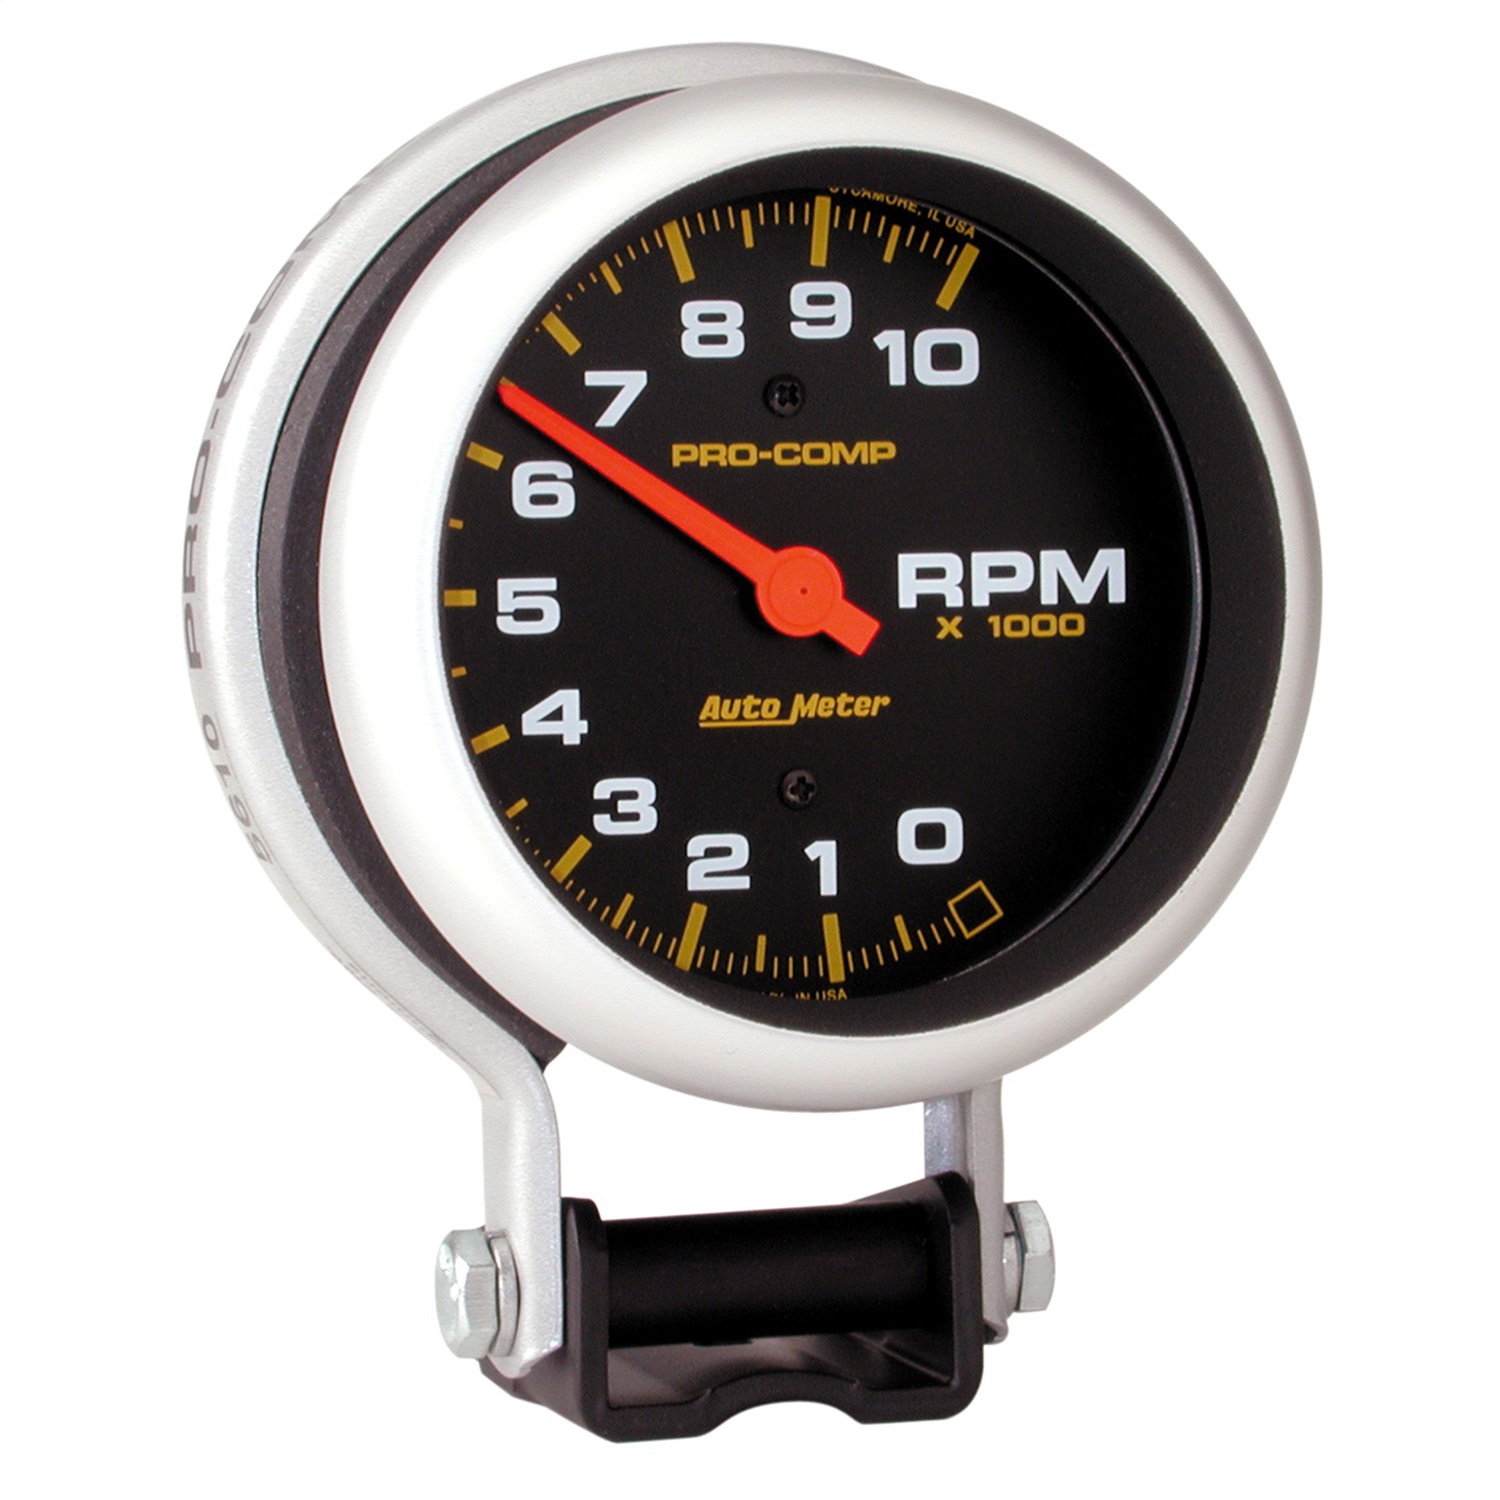 Auto Meter Auto Meter 5610 Pro-Comp; Tachometer